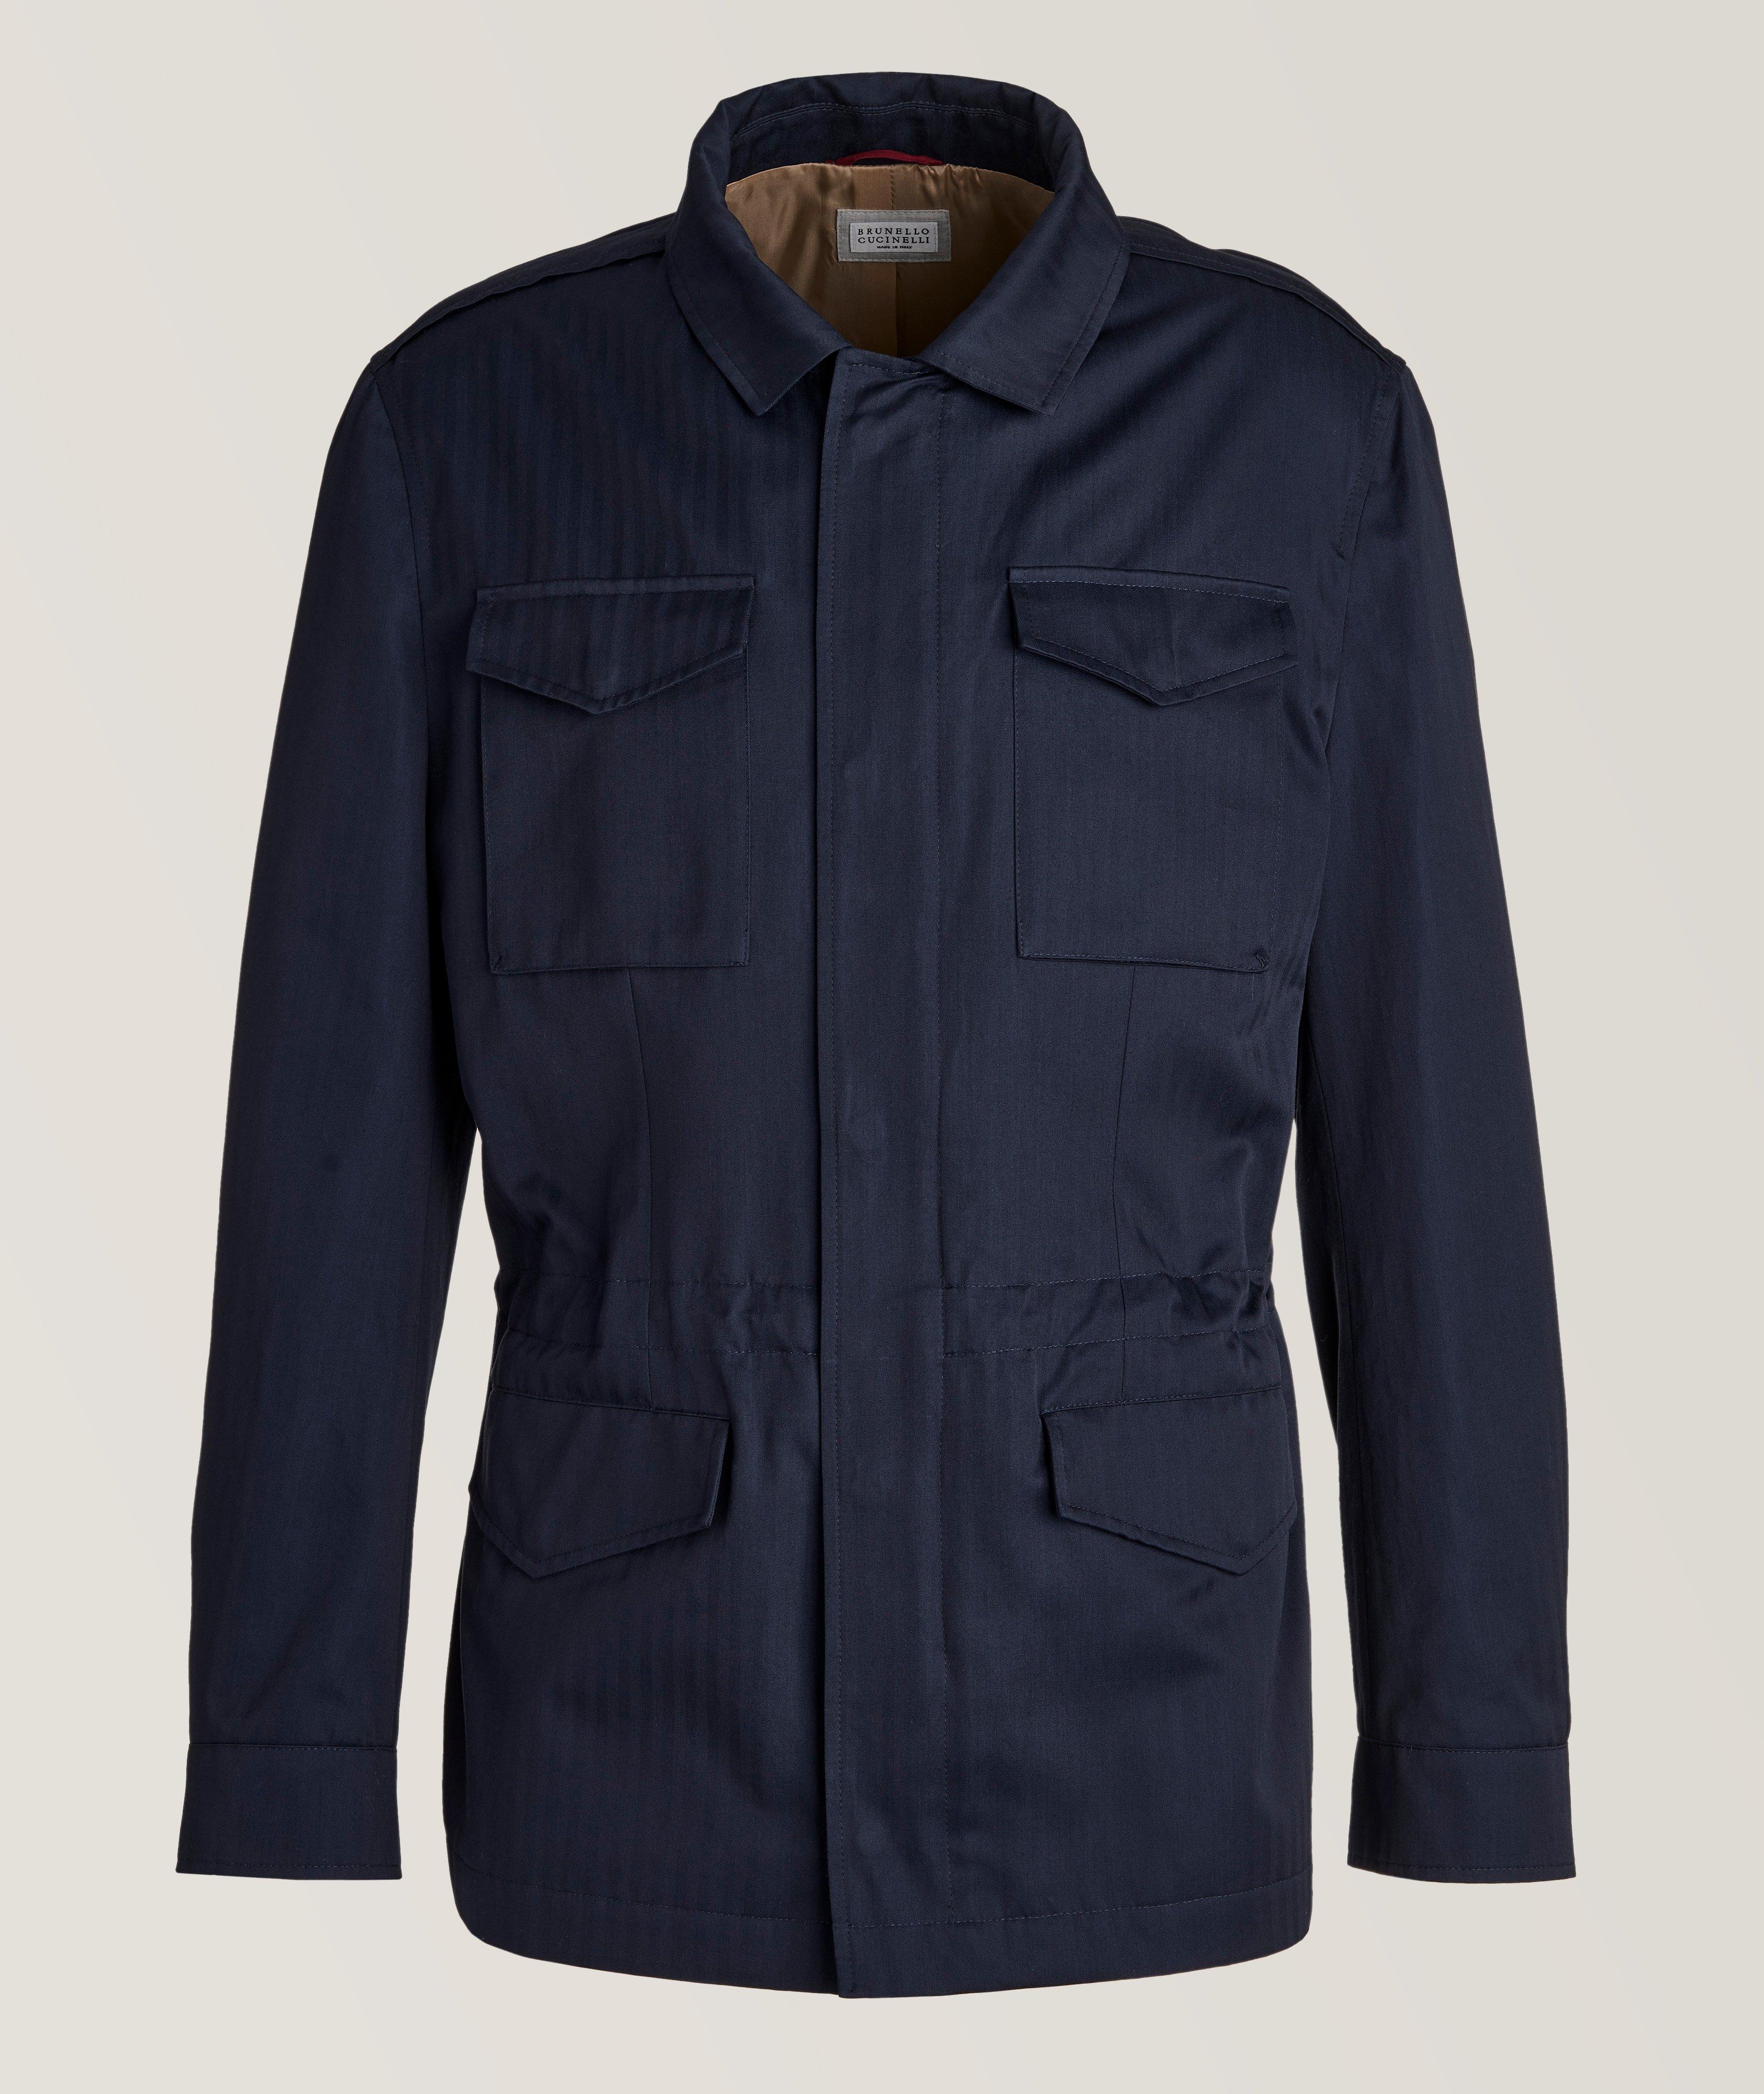 Brunello Cucinelli Cotton Herringbone Field Jacket